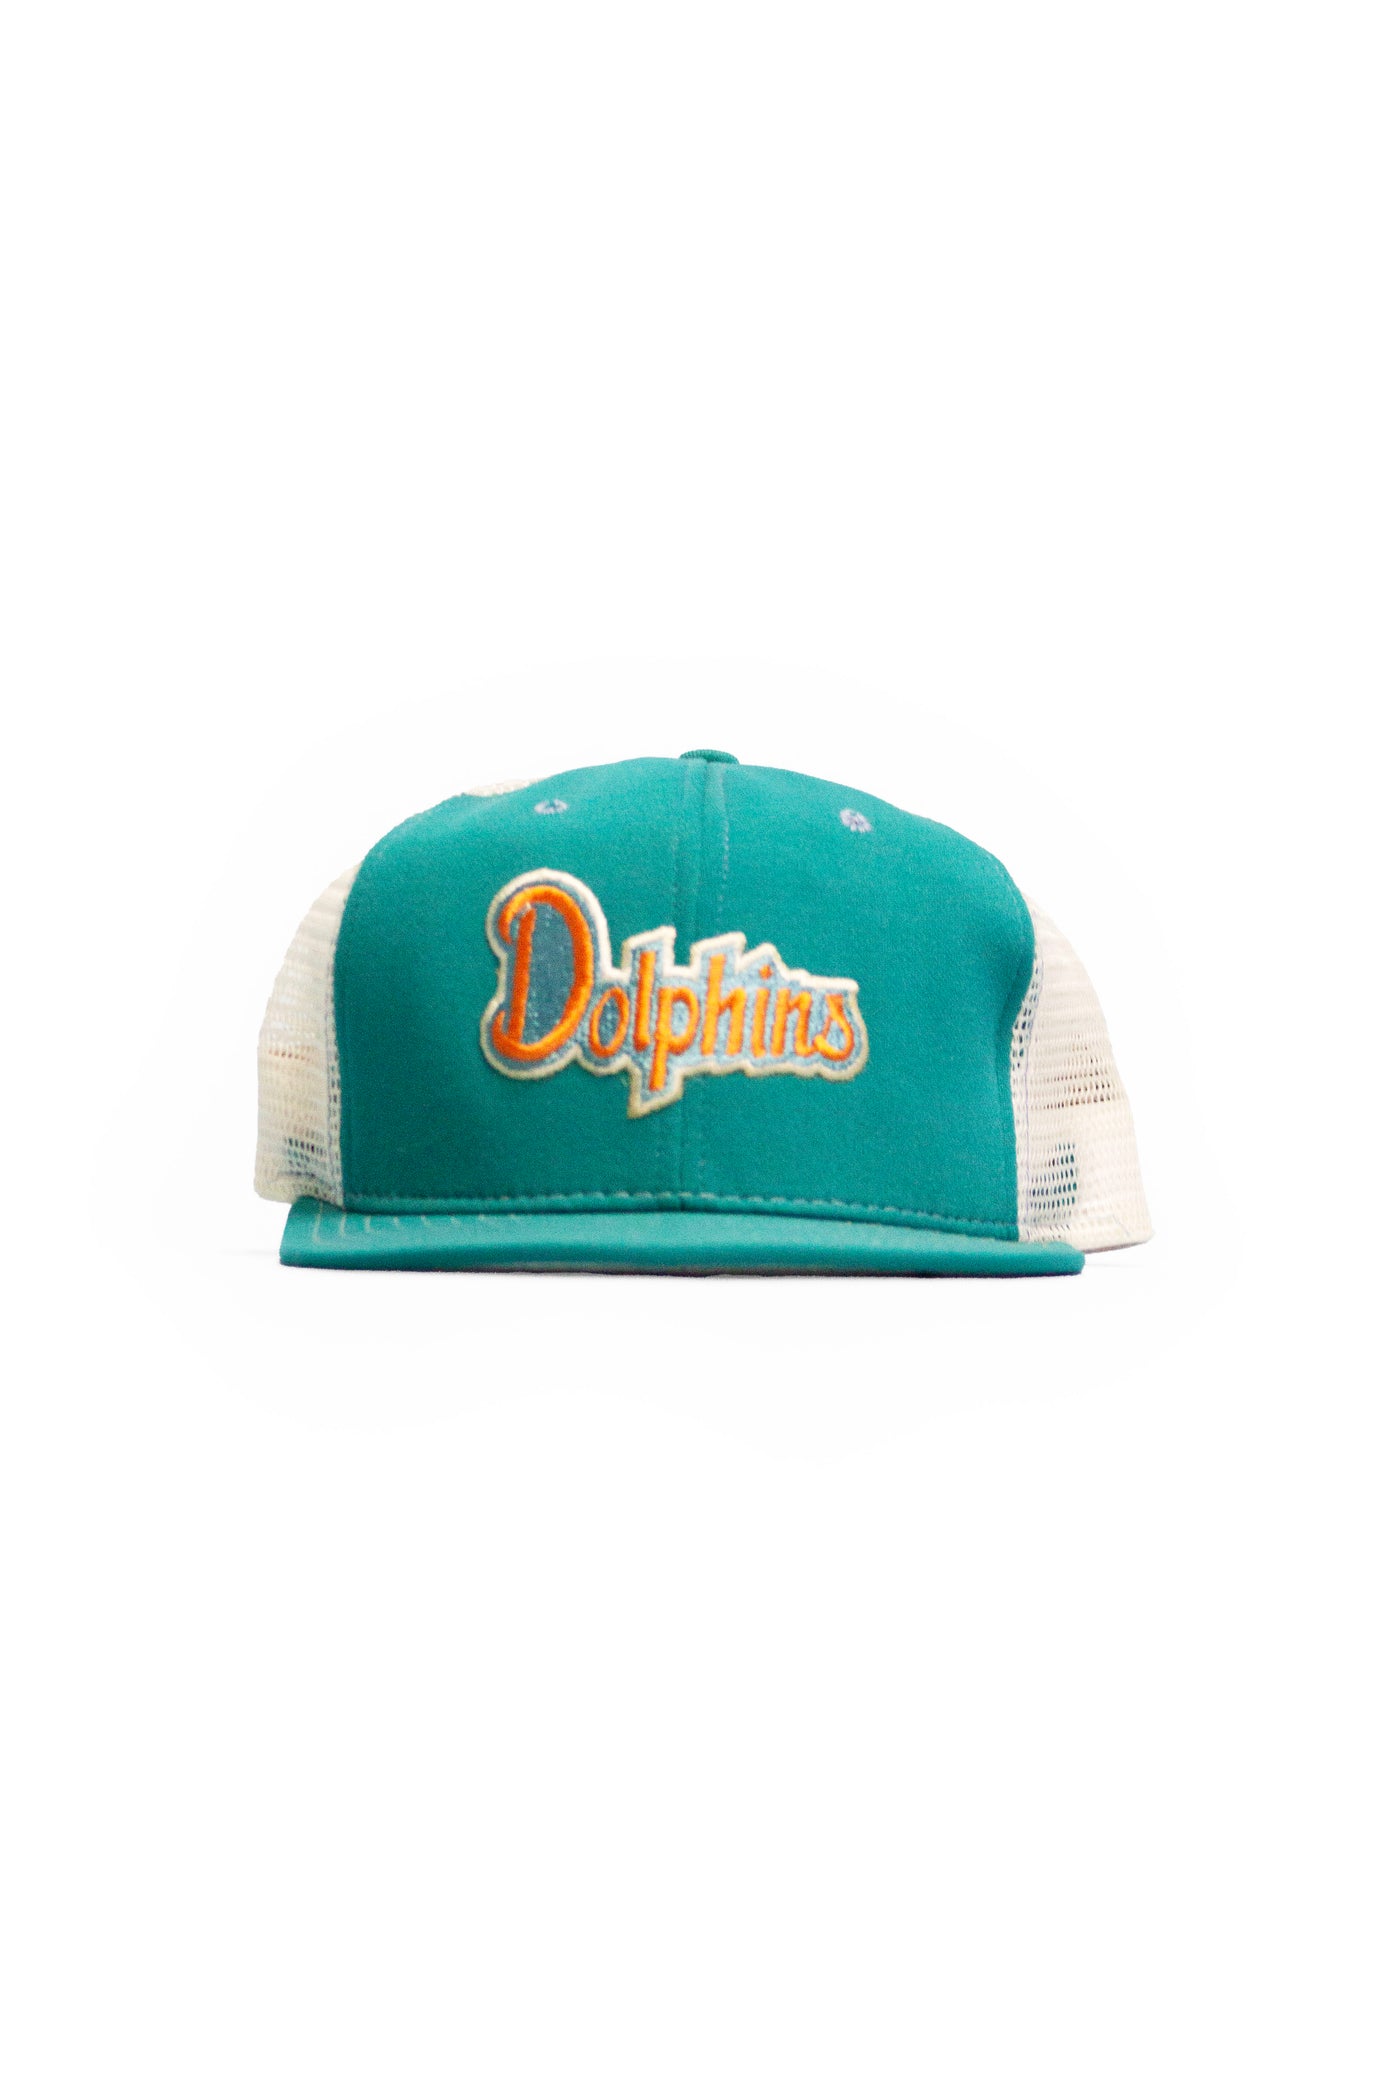 Vintage 90s Miami Dolphins Trucker Hat